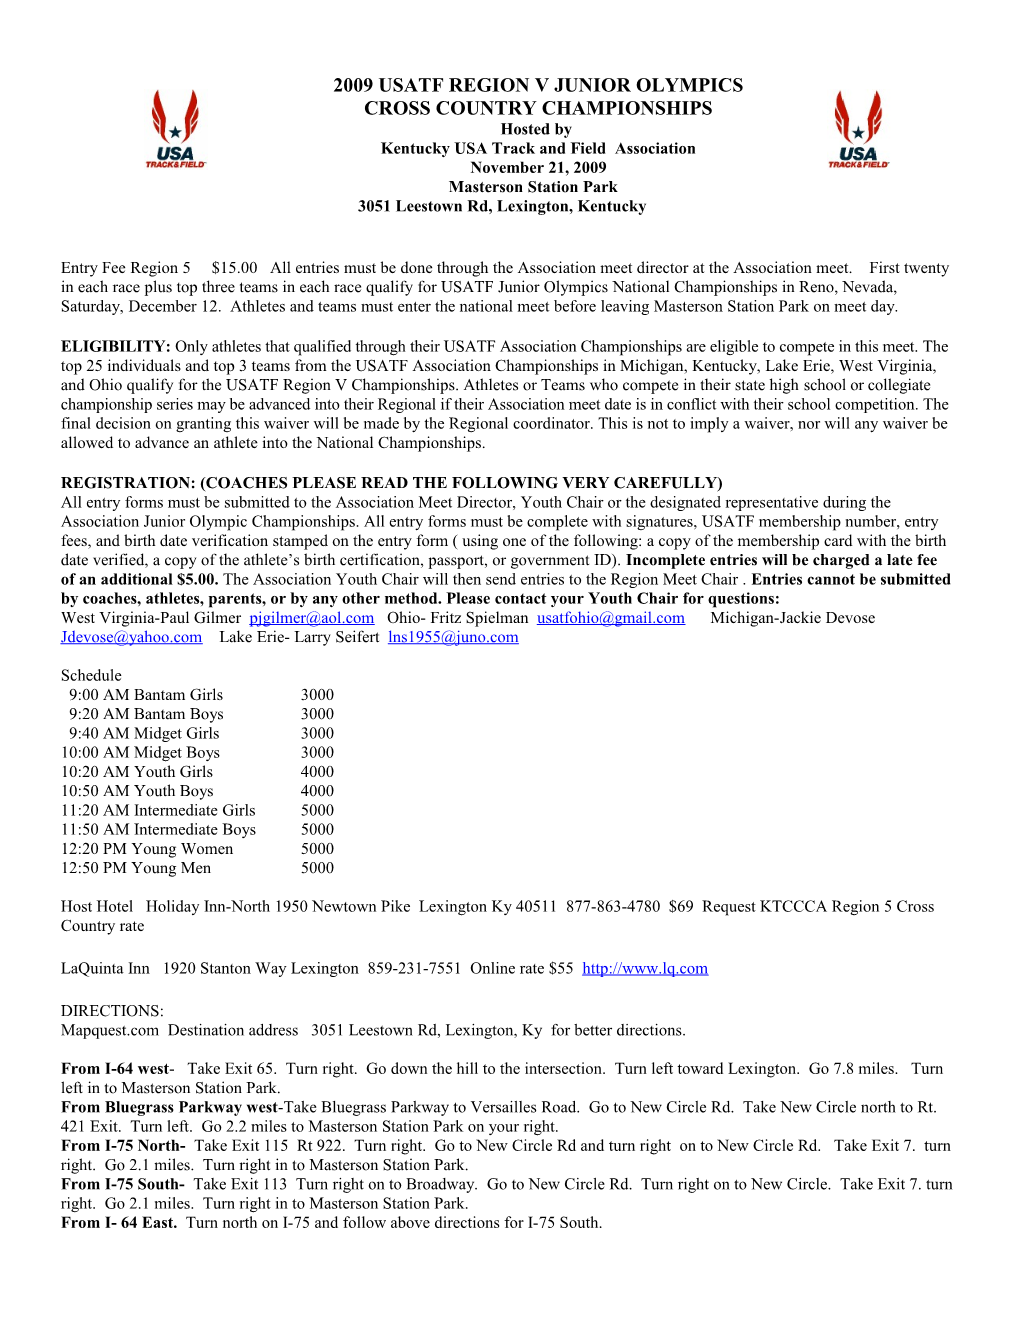 Region 5 USA Track & Field Junior Olympics Cross Country Meet